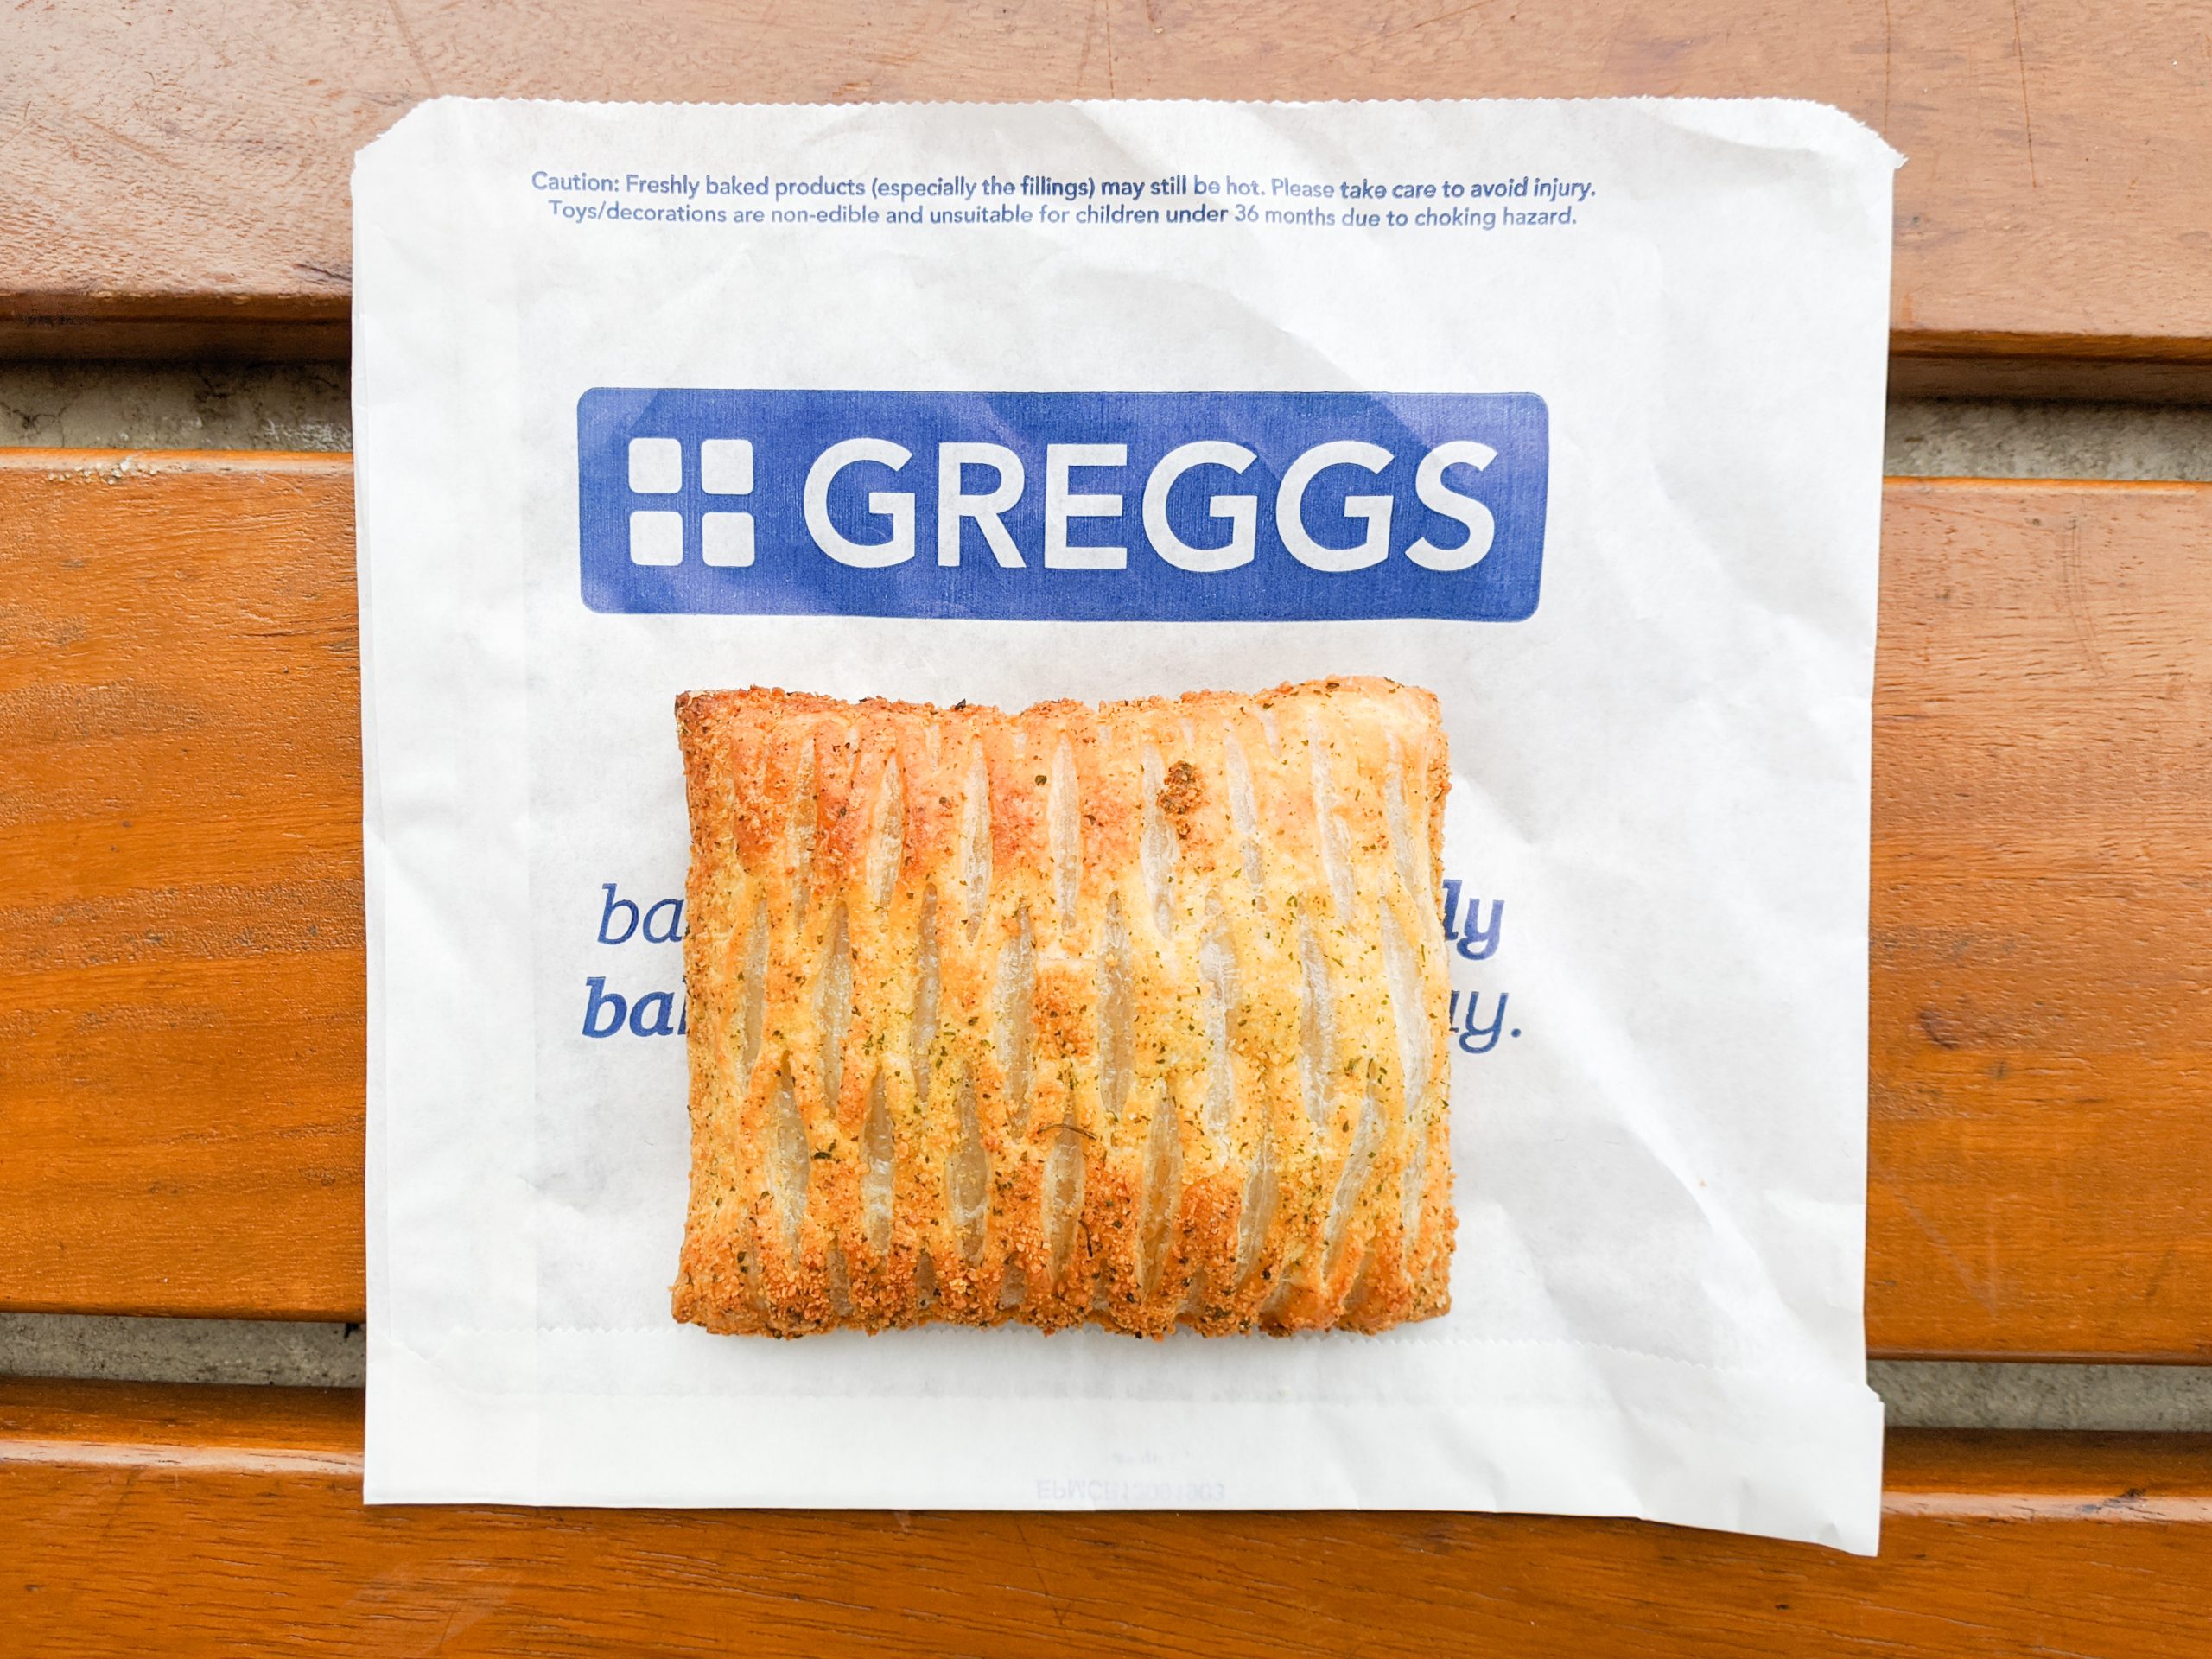 Greggs pasty on branded paper bag